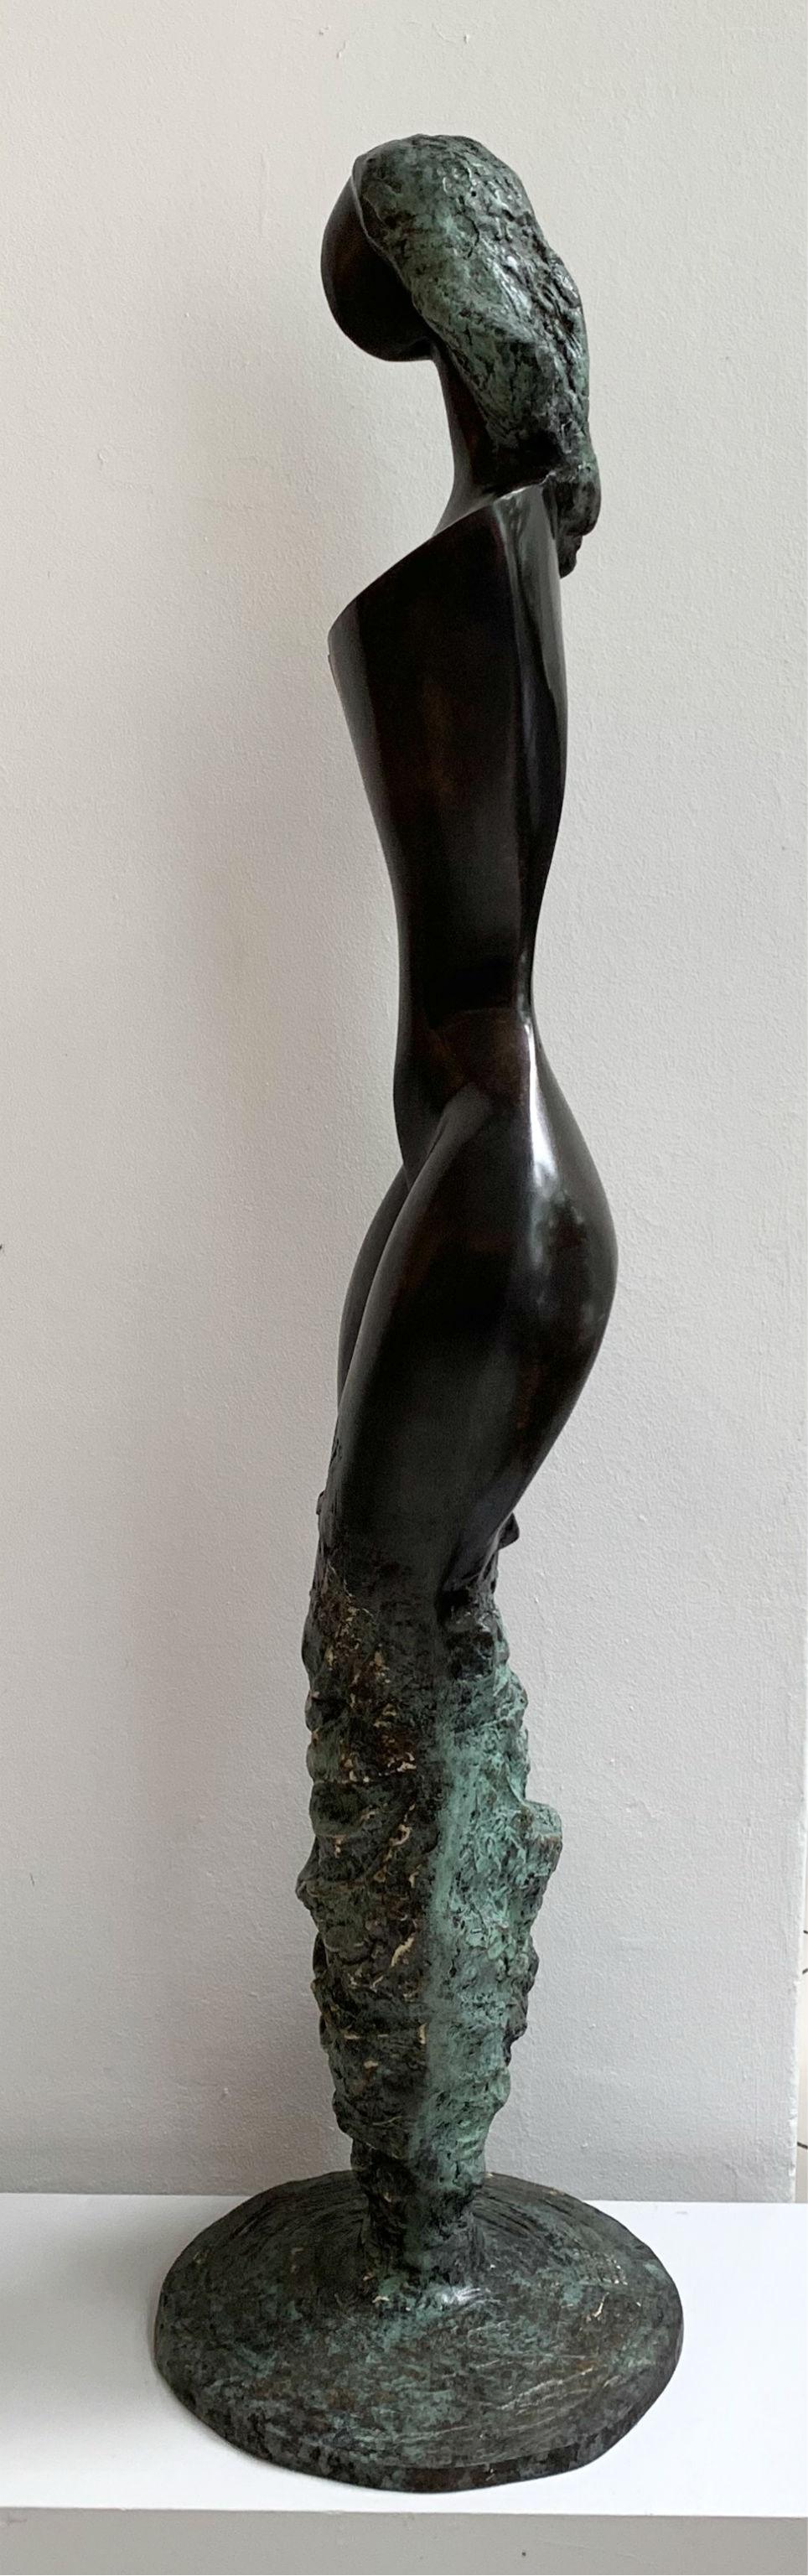 Wave venus - XXI century Contemporary bronze sculpture, Abstract & figurative - Sculpture by Stanisław Wysocki